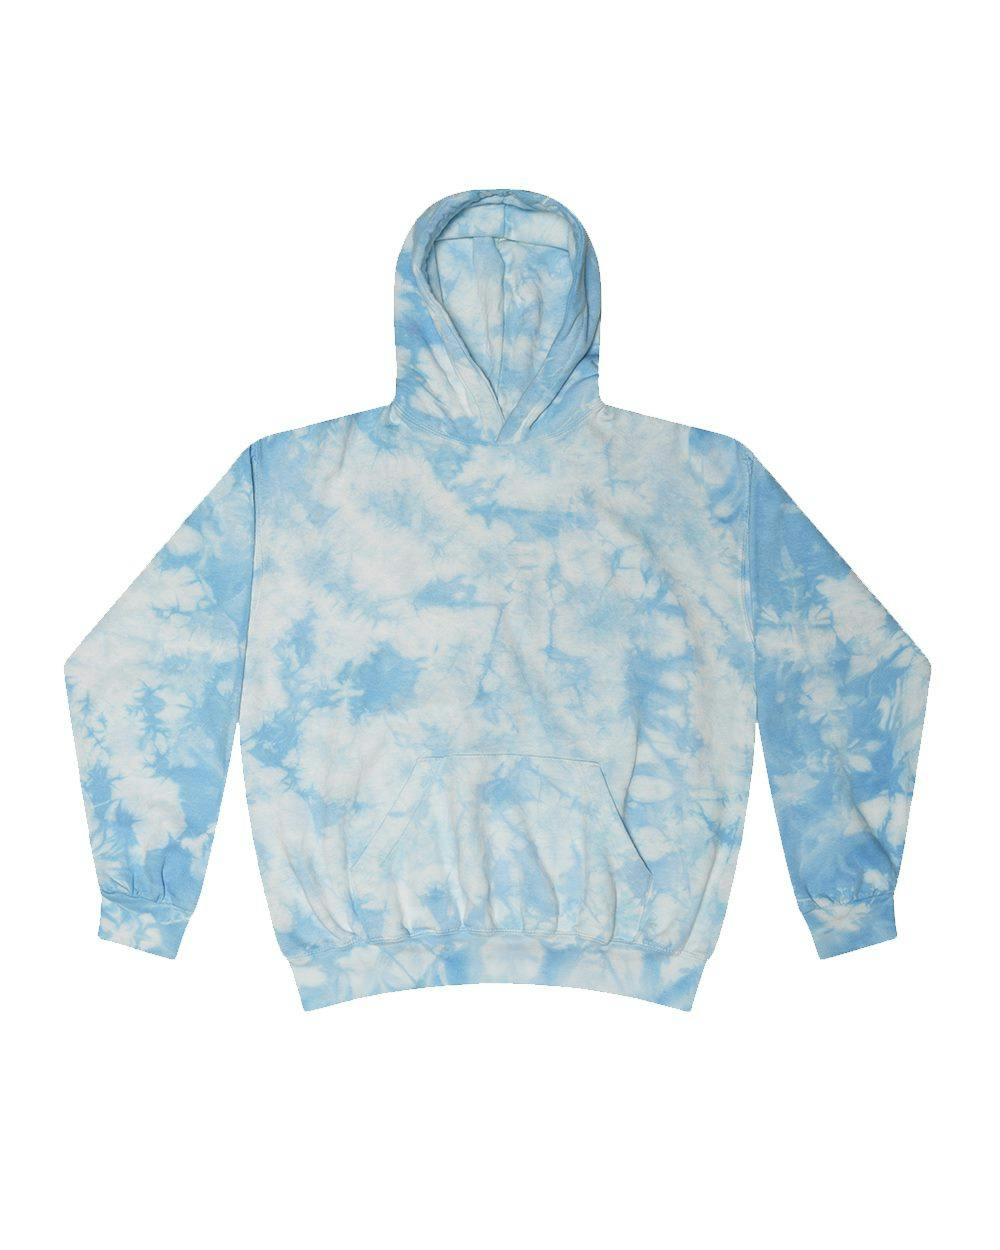 Image for Youth Crystal Wash Hooded Sweatshirt - 8790Y